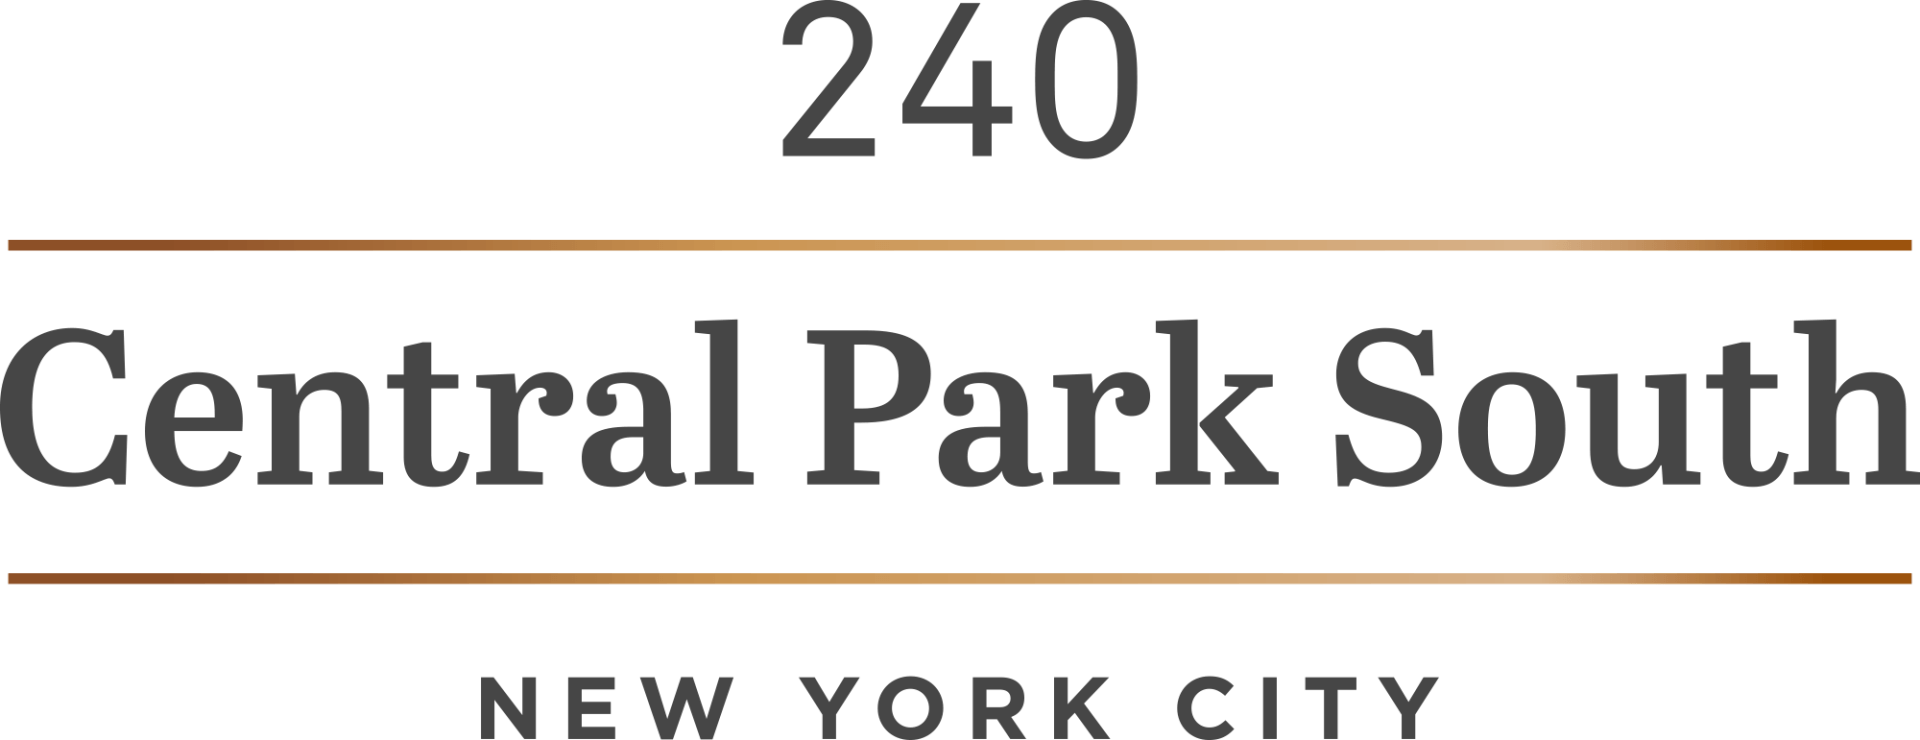 Central Park South Associates, LLC Logo